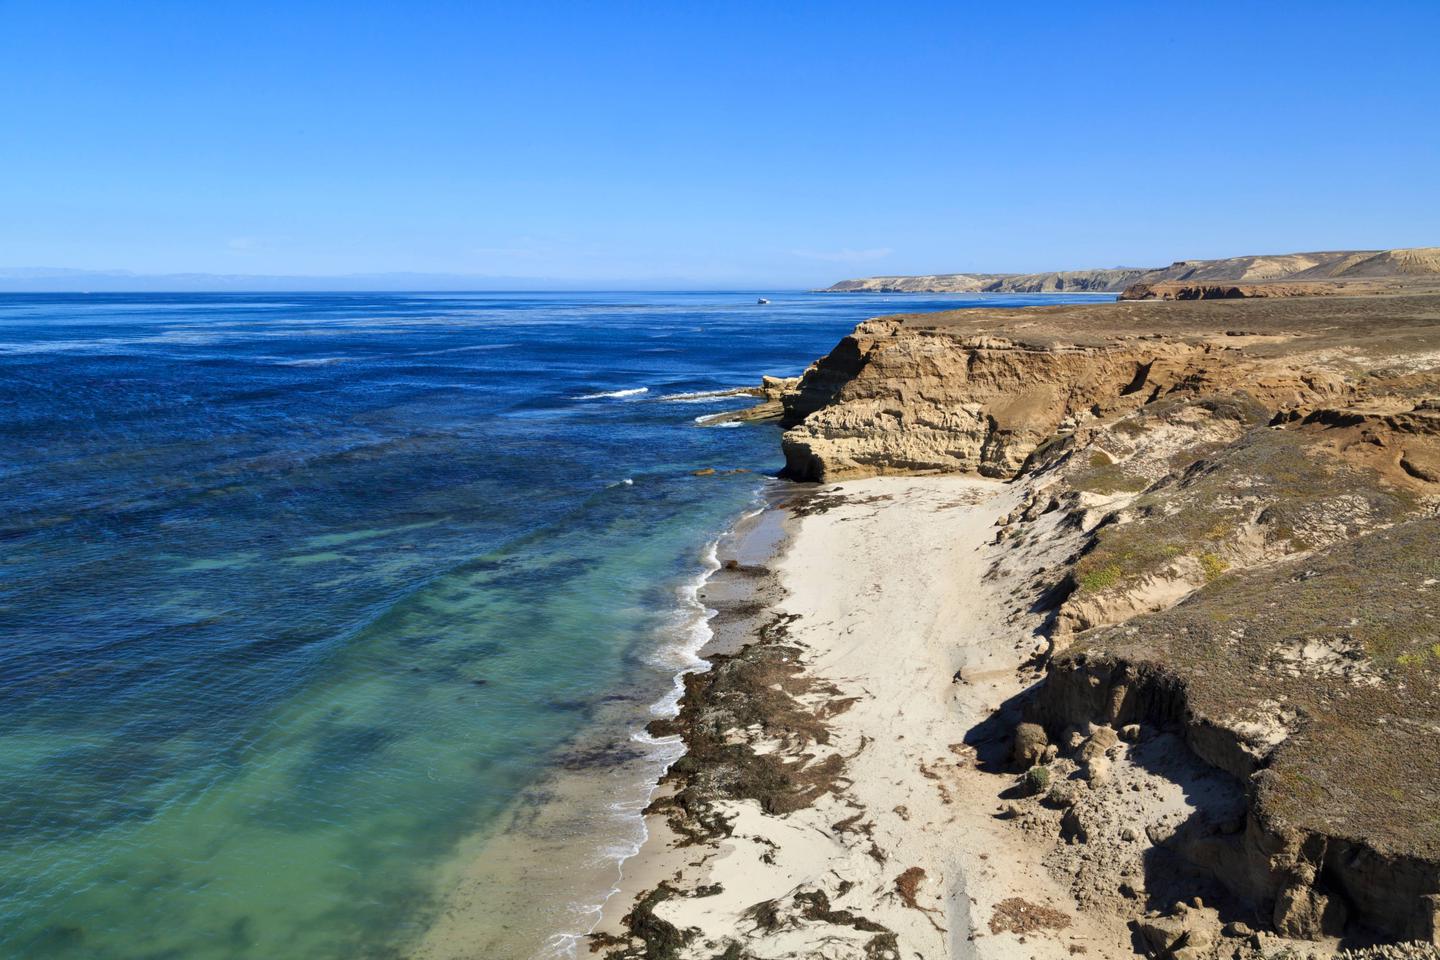 Coastline with sandy beach and low bluffsNorthwest coast of Santa Rosa Island.